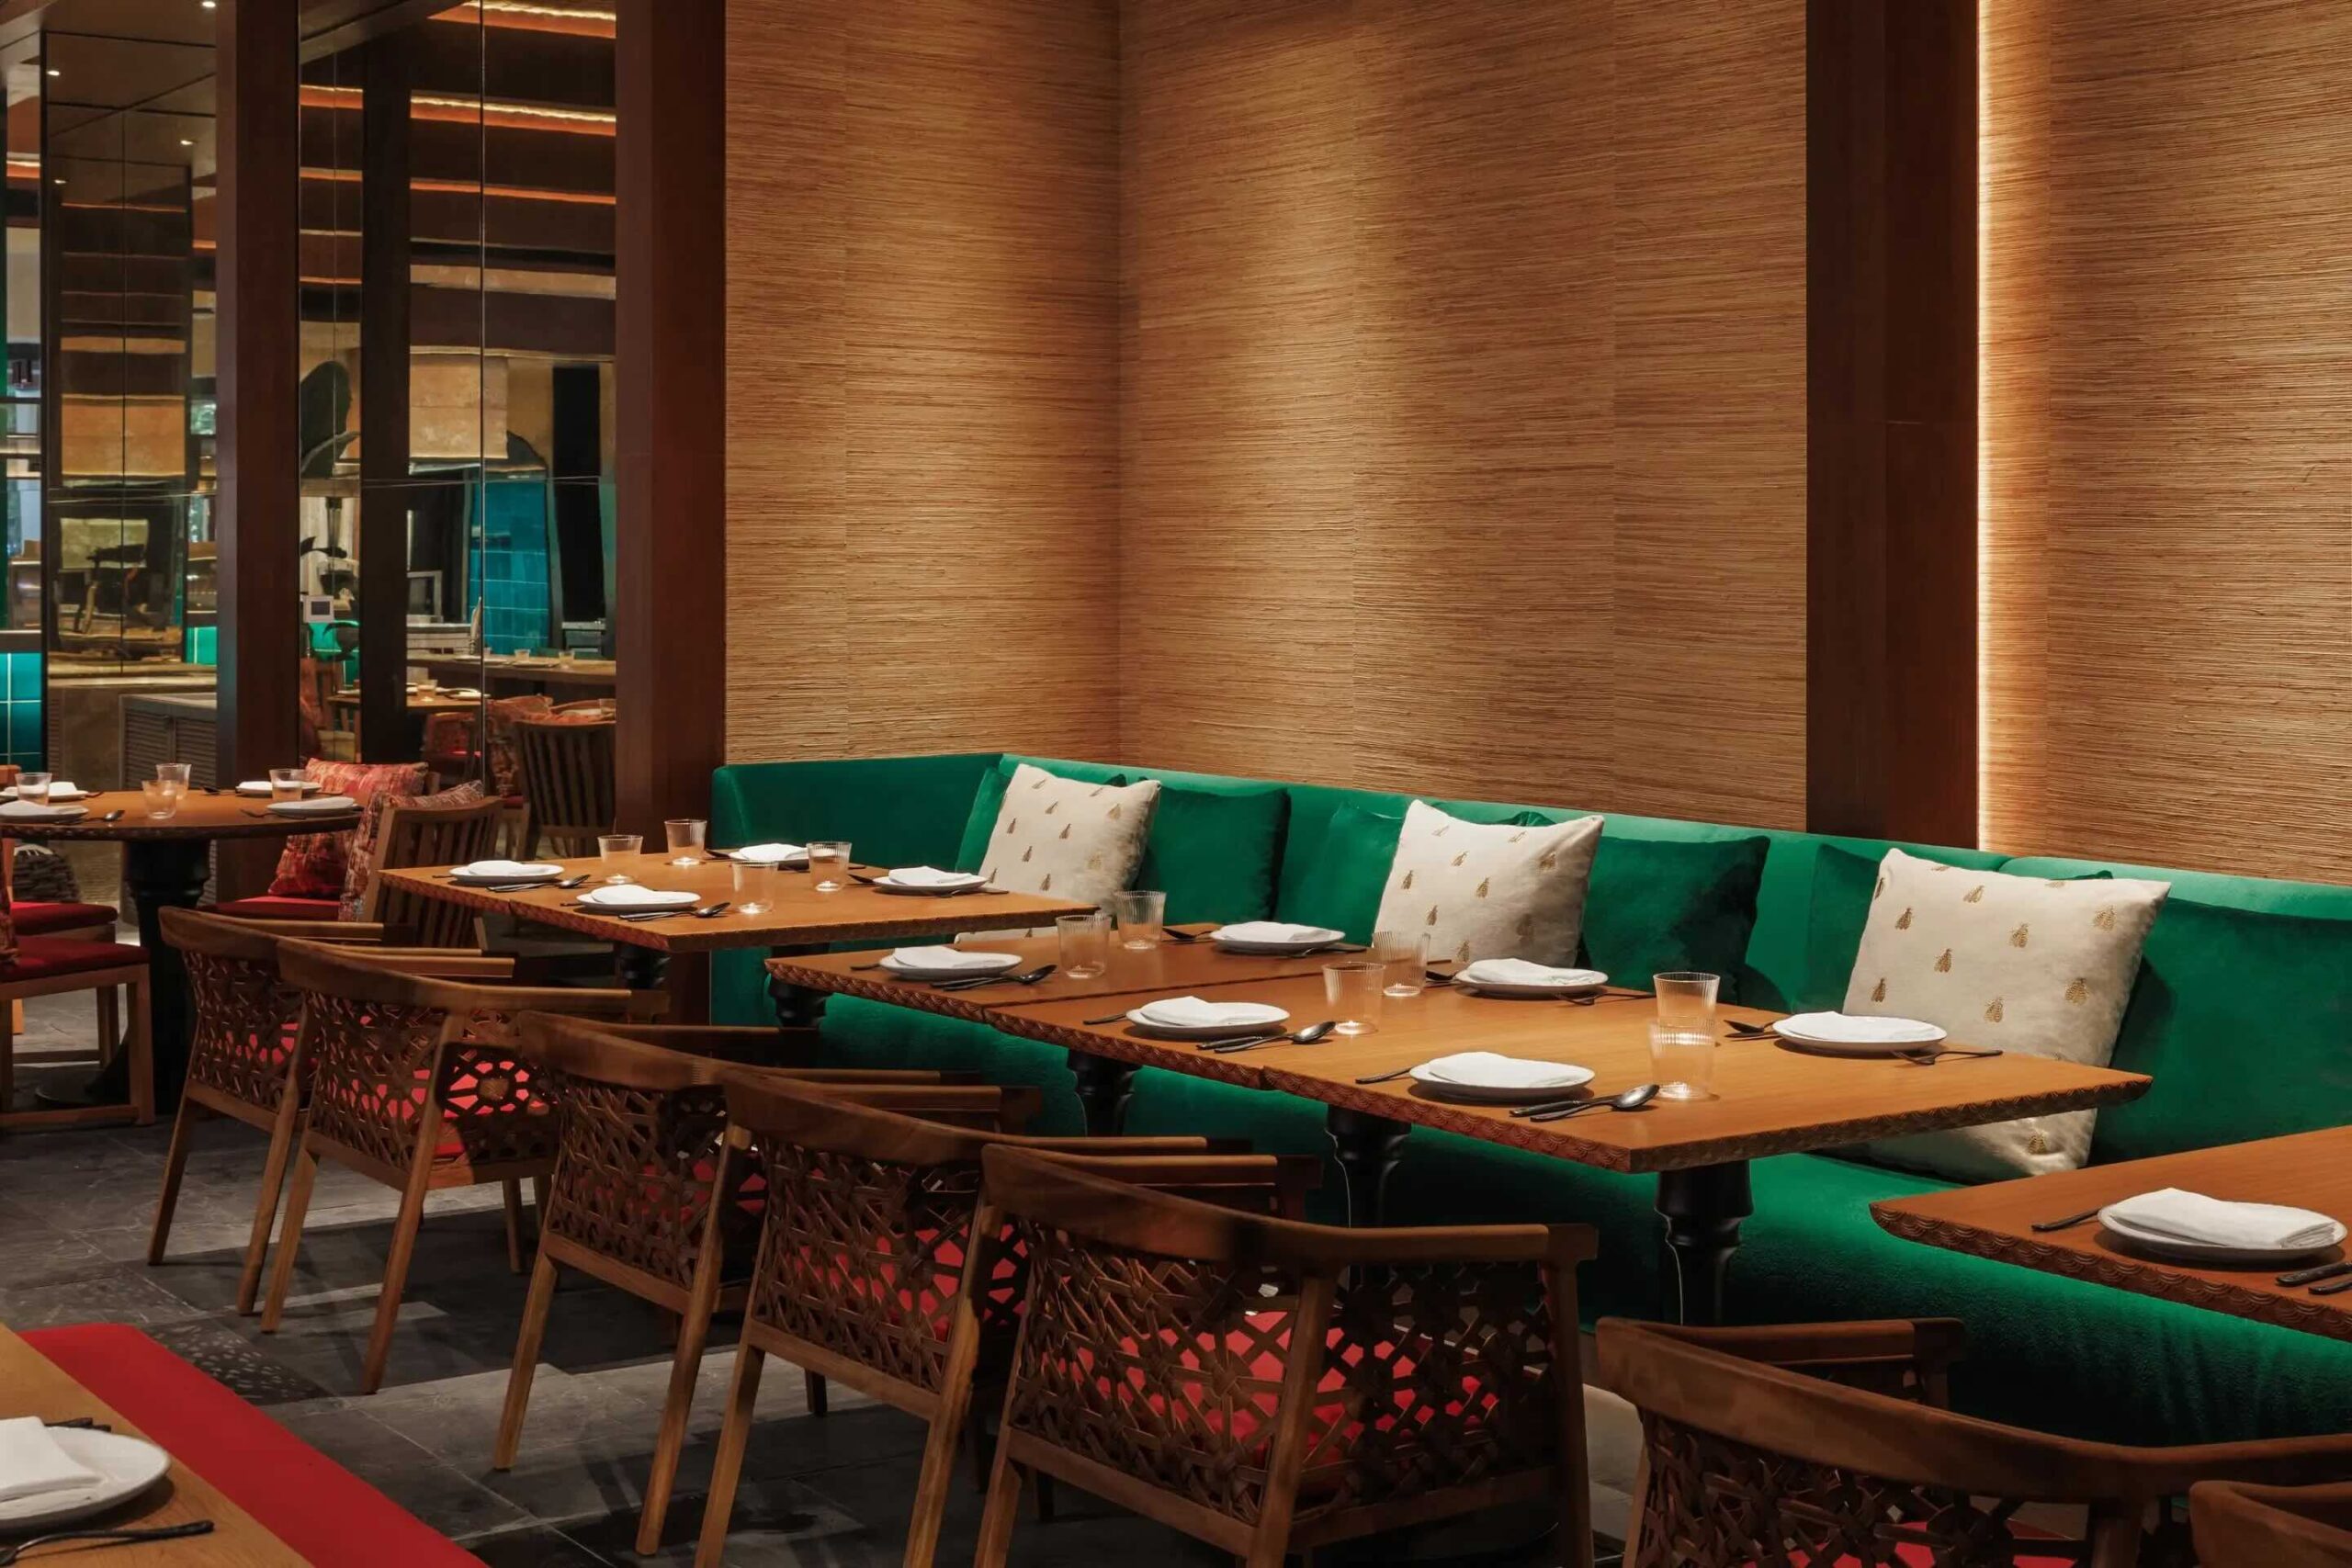 new restaurants in Dubai